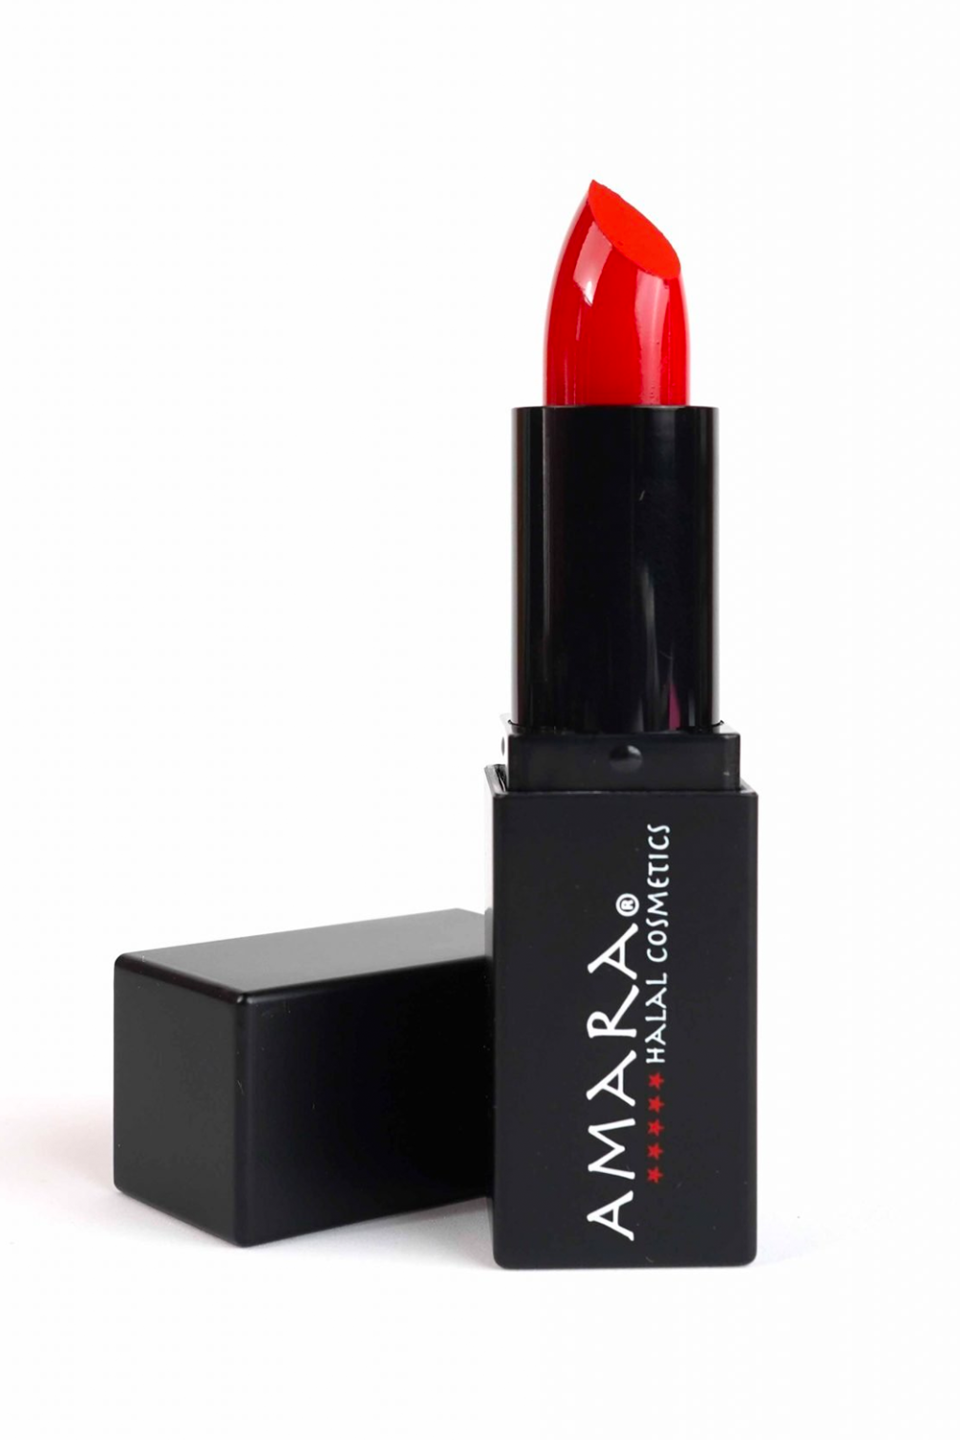 1) Amara Cosmetics Moisture Rich Matte Lipstick Berry Red